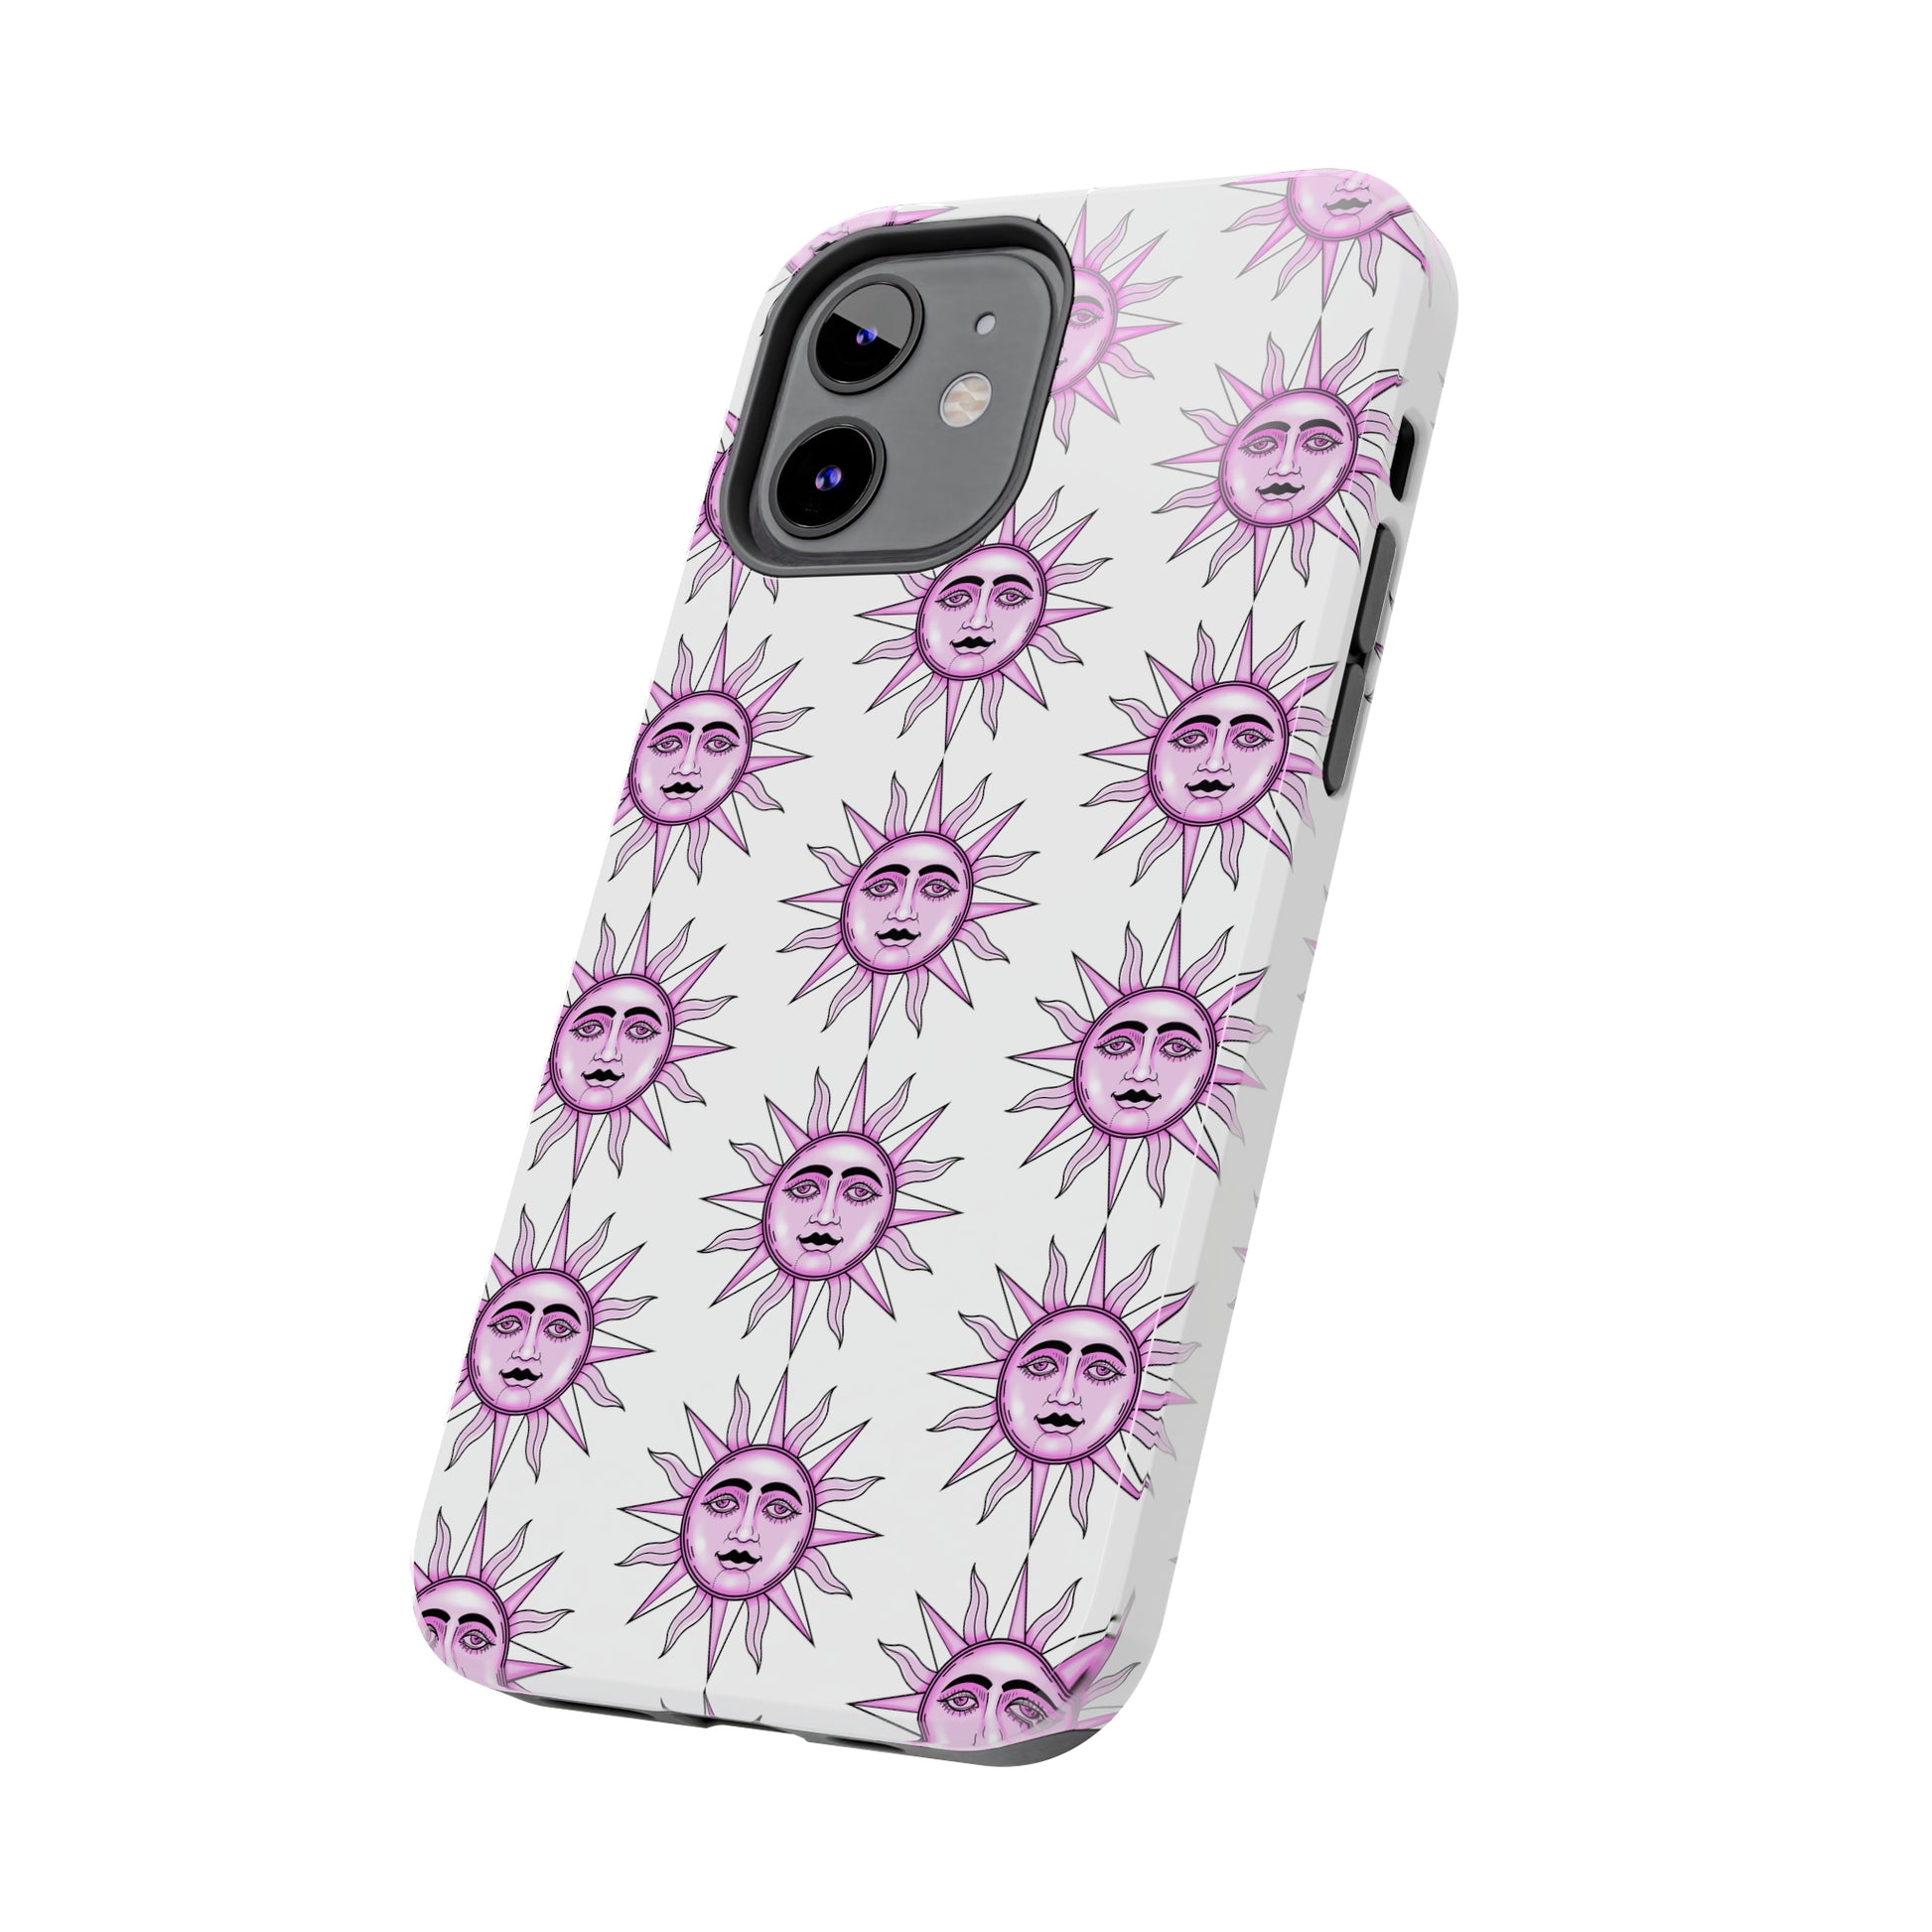 Sun Worship: iPhone Tough Case Design - Wireless Charging - Superior Protection - Original Designs by TheGlassyLass.com